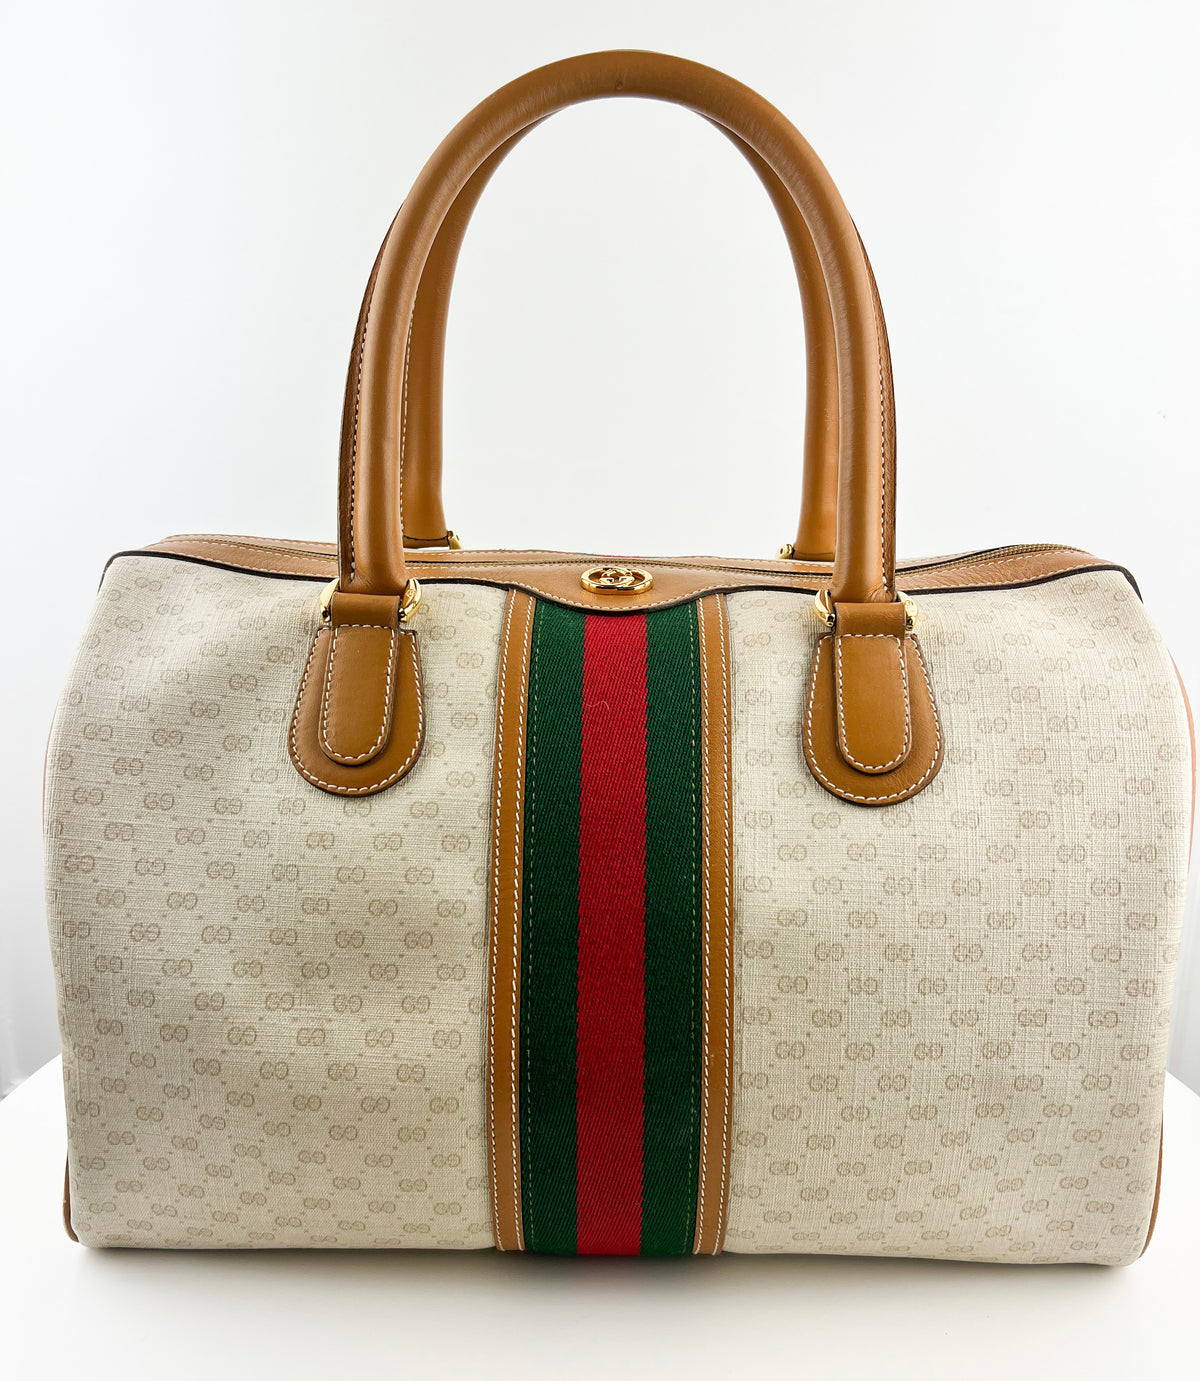 Authentic Gucci Boston Bag (Medium size)